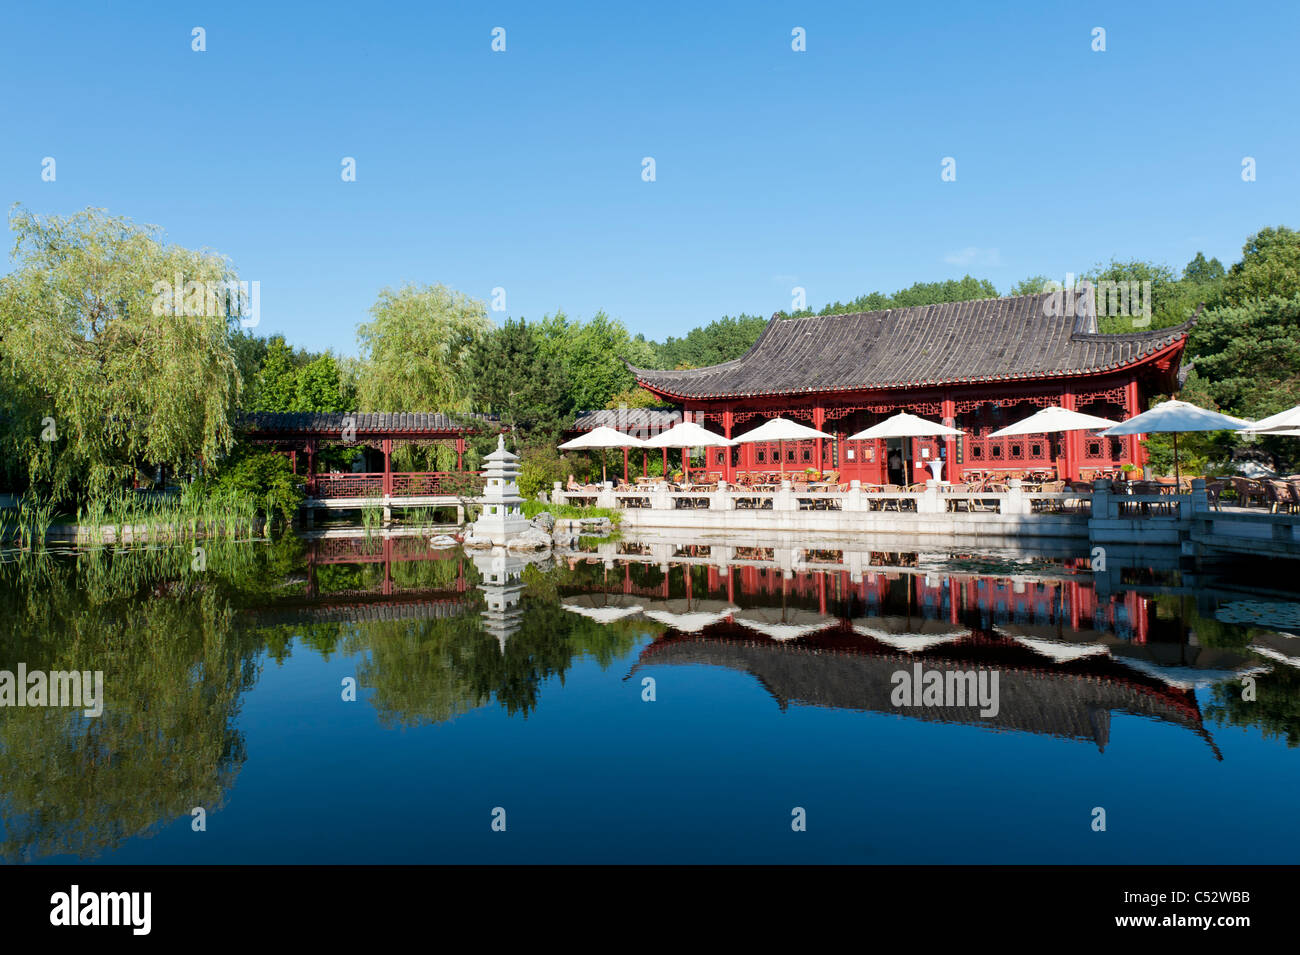 The Chinese Garden at the Garten der Welt in Marzahn district of Berlin Germany Stock Photo